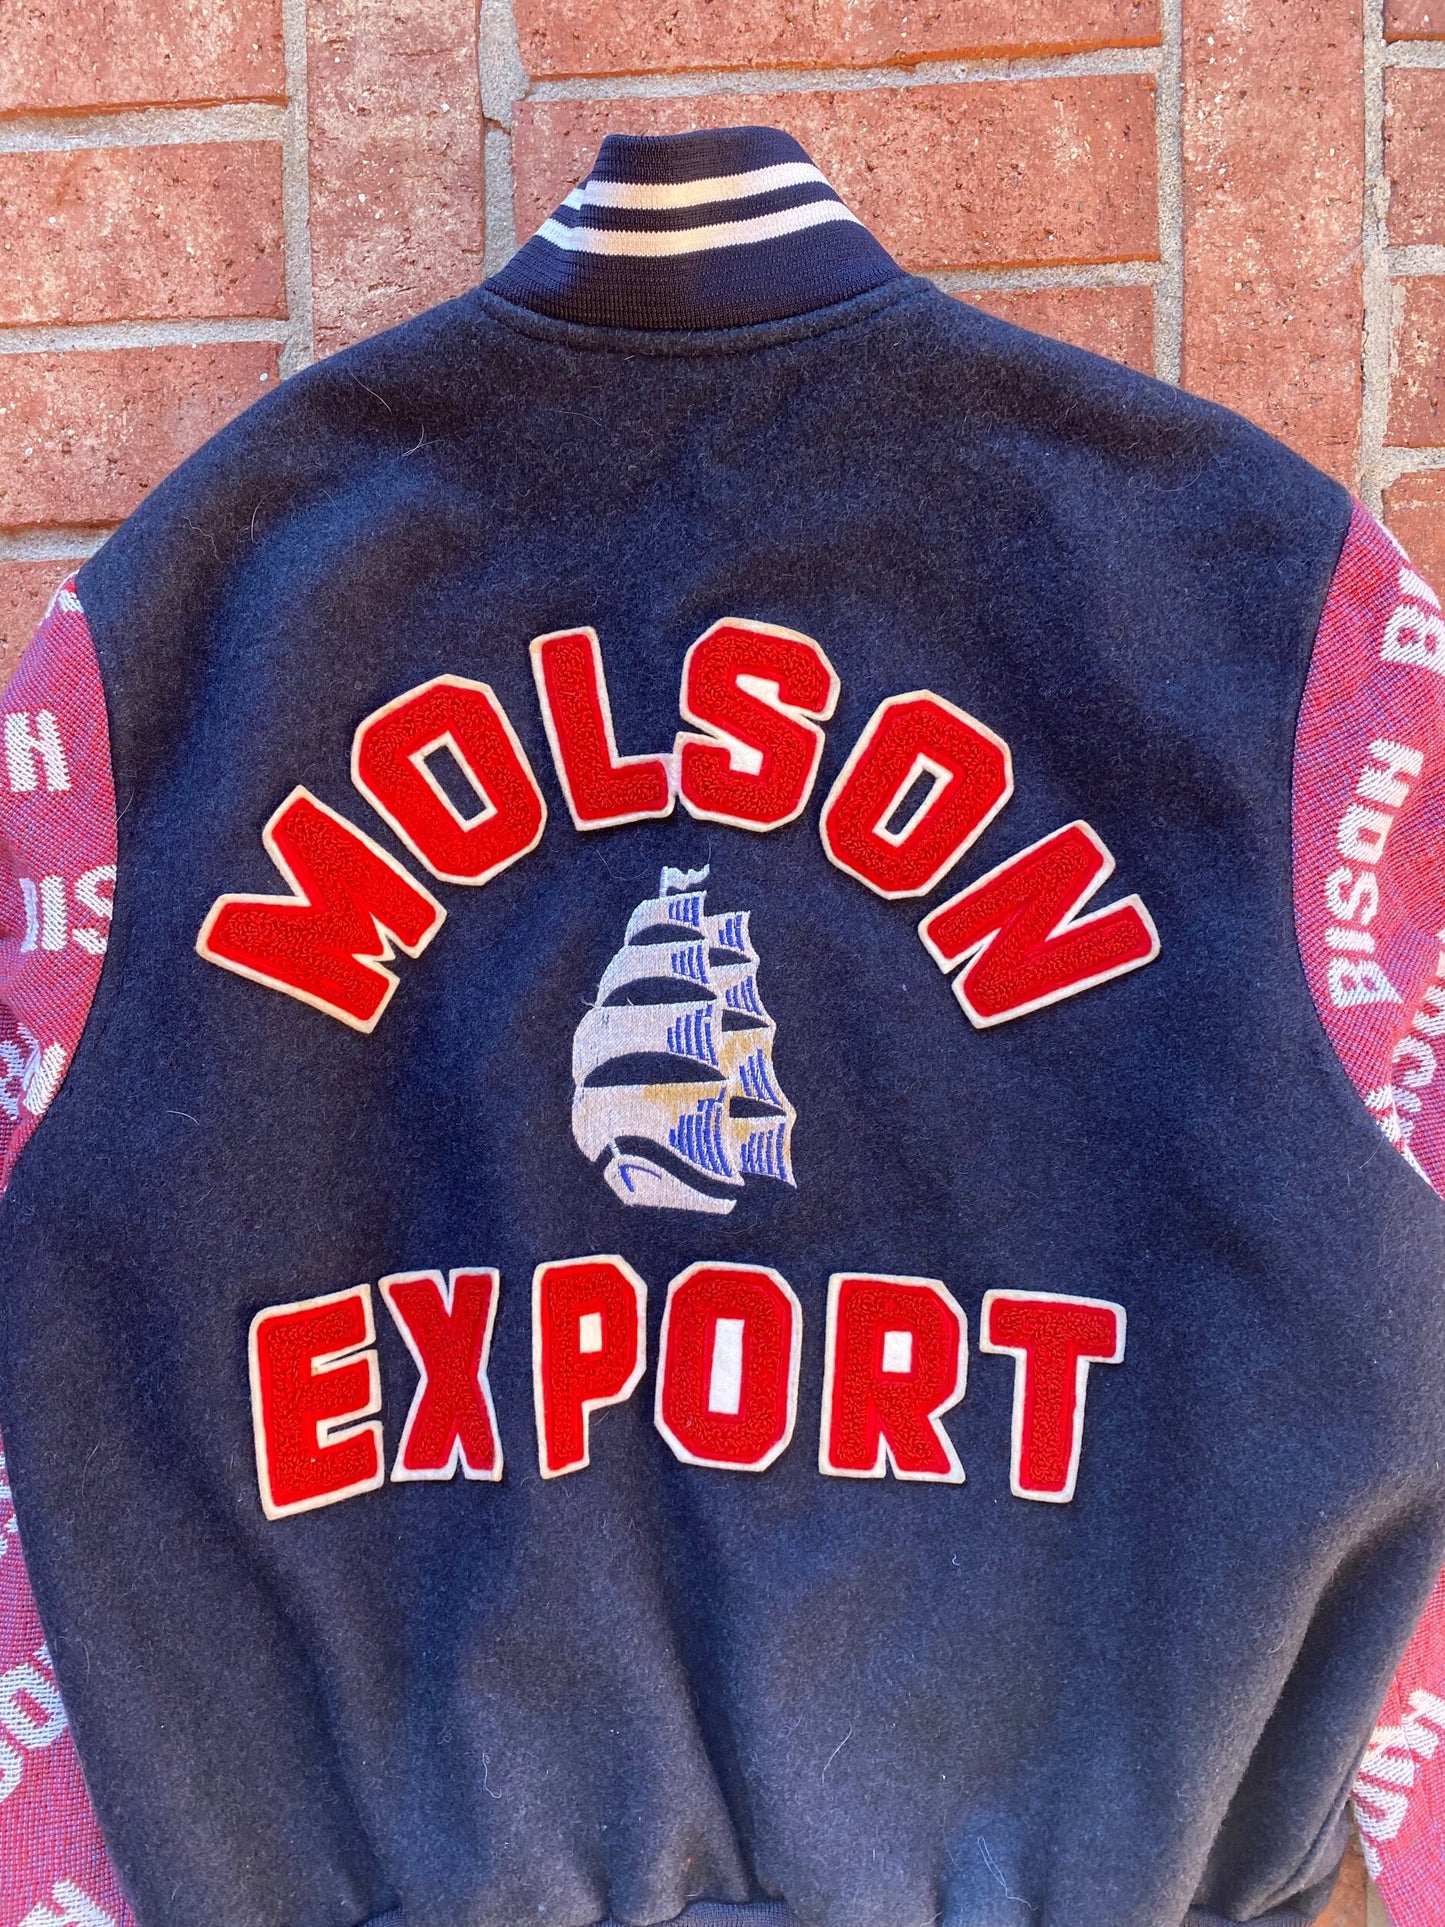 Molson Export Corduroy Varsity